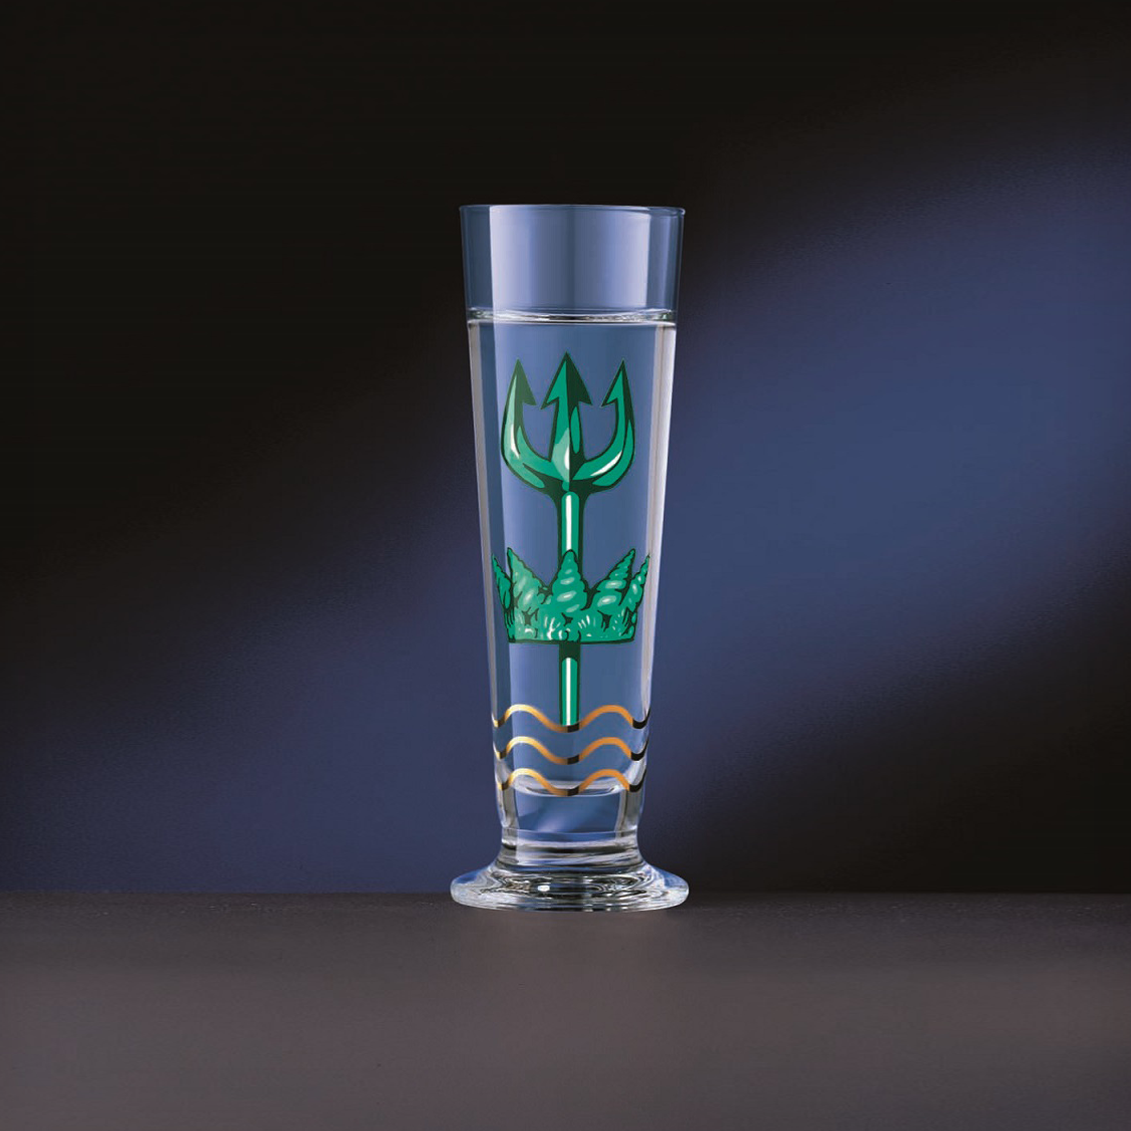 “Trident” Schnapps Glass for Ritzenhoff